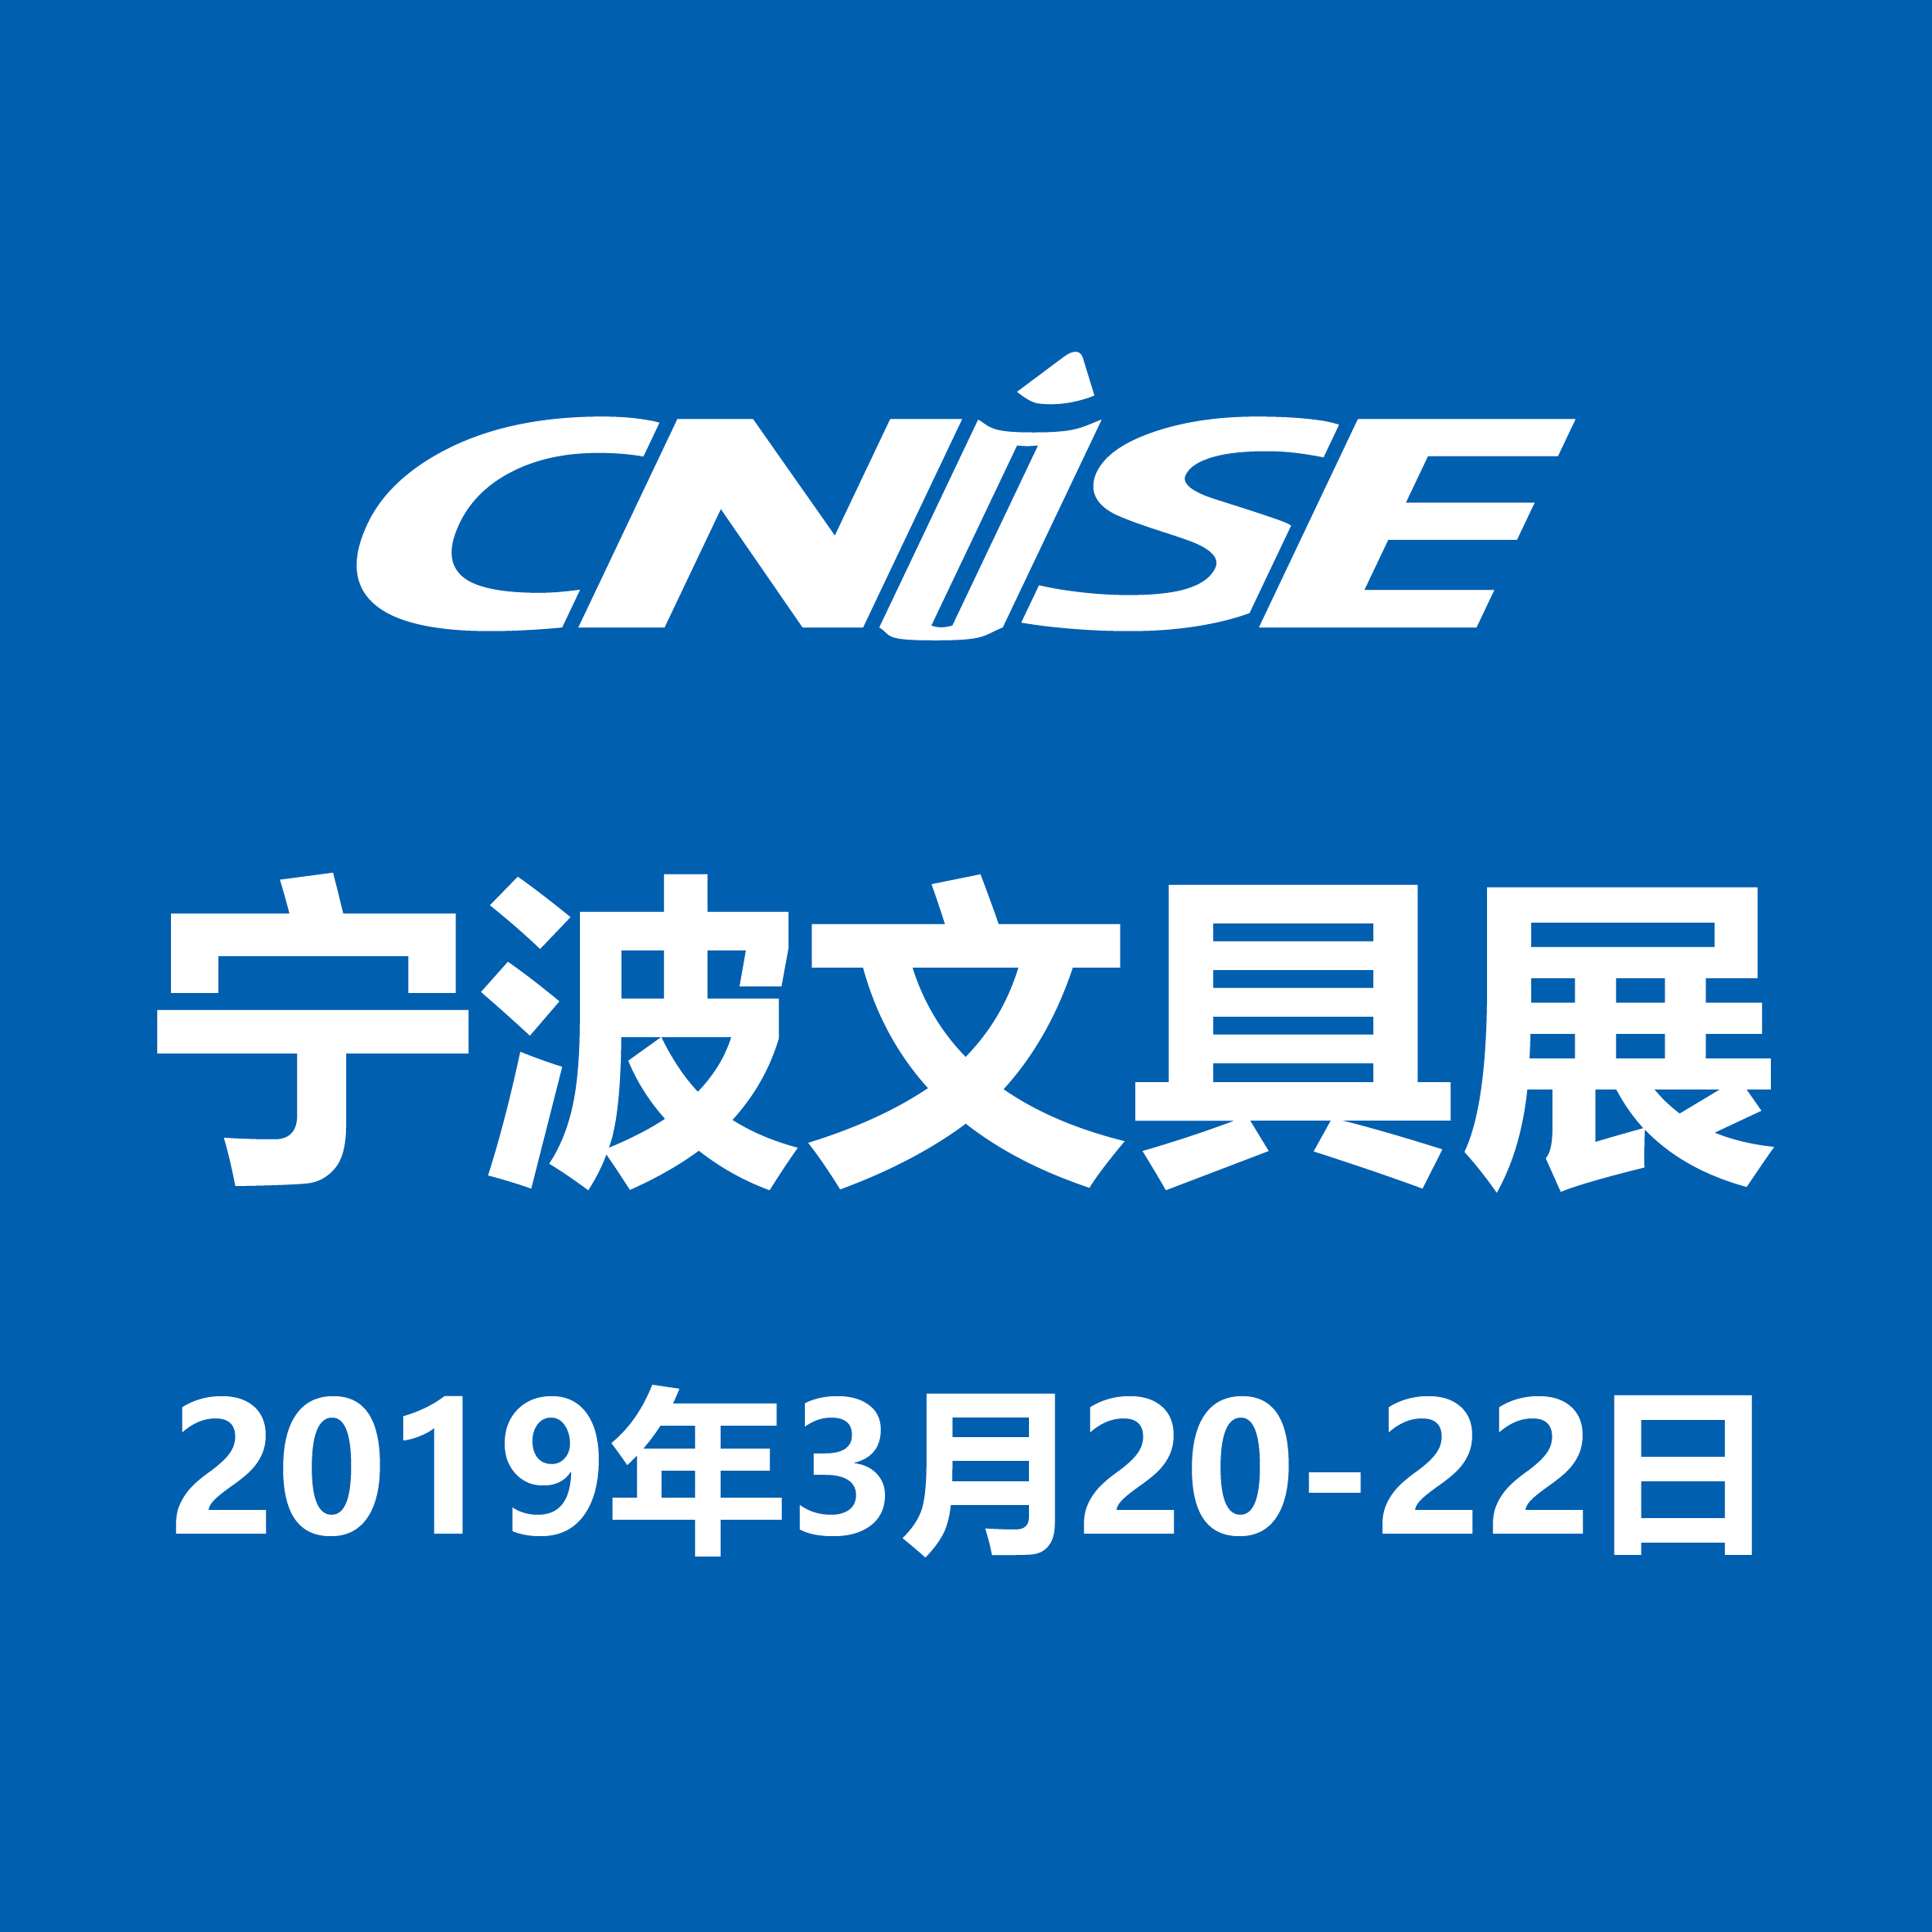 CNISE 2018 *15届中国国际文具礼品博览会